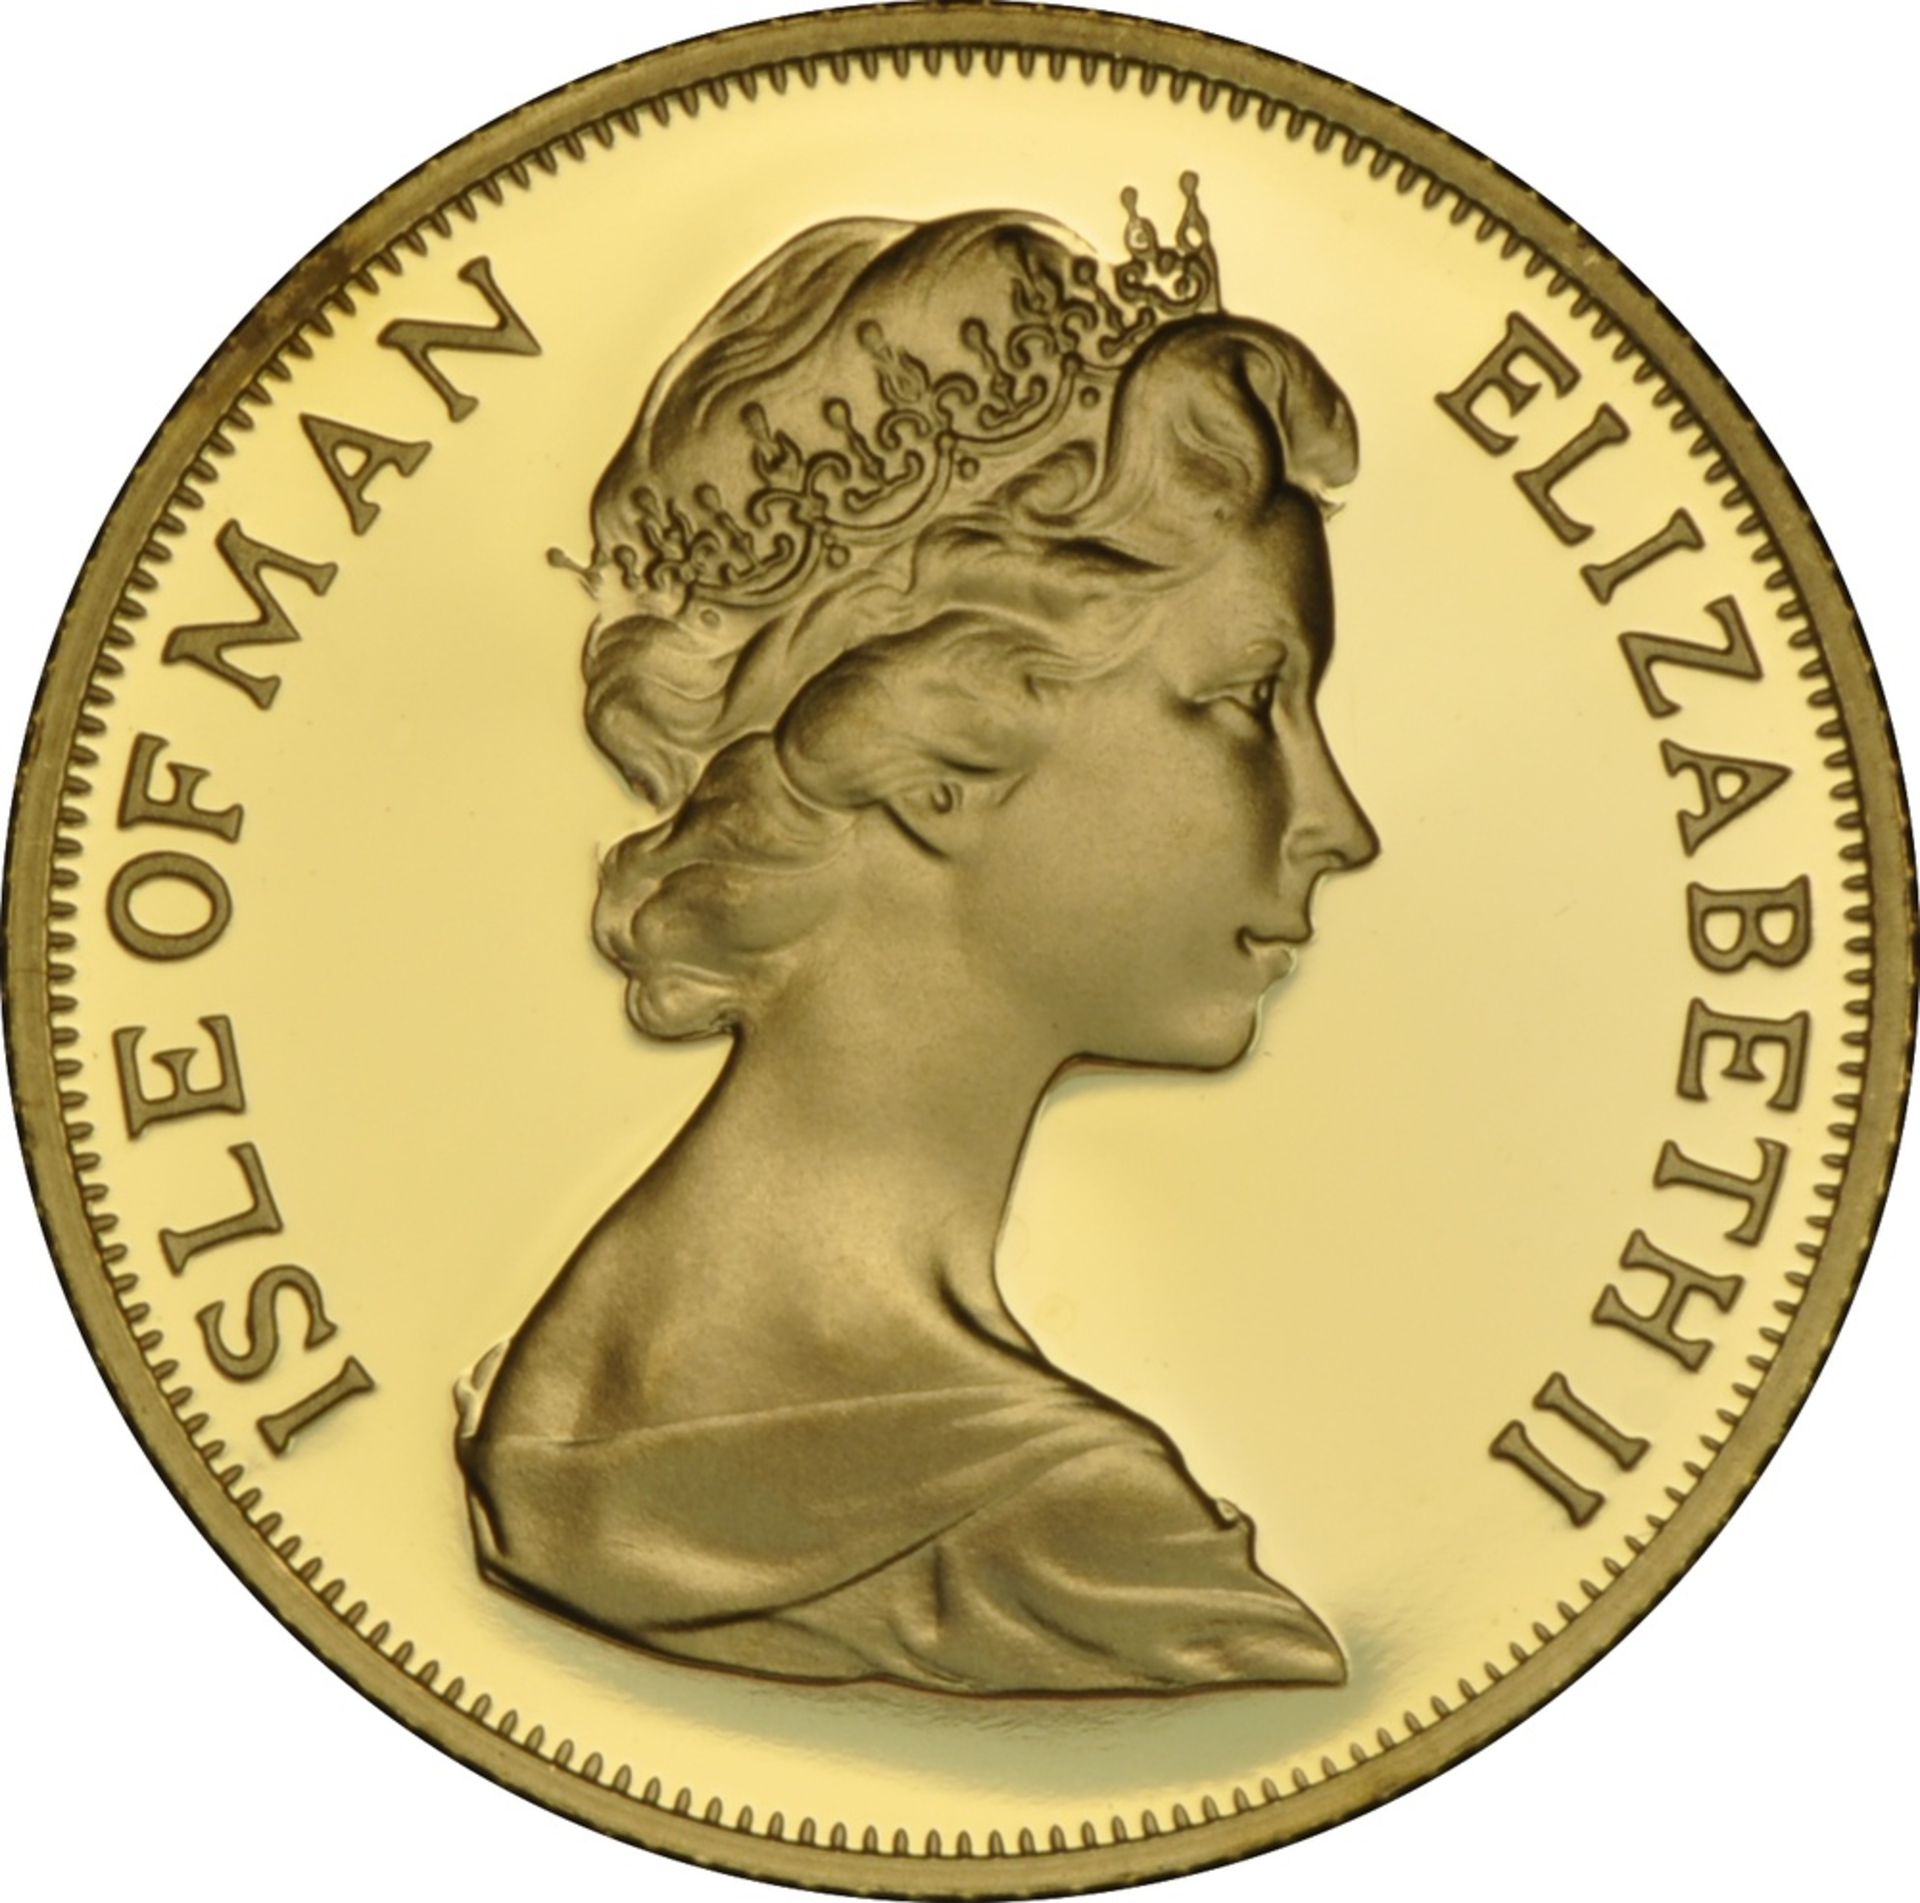 Isle of Man, Elizabeth II, gold Half-Sovereign - Image 2 of 2